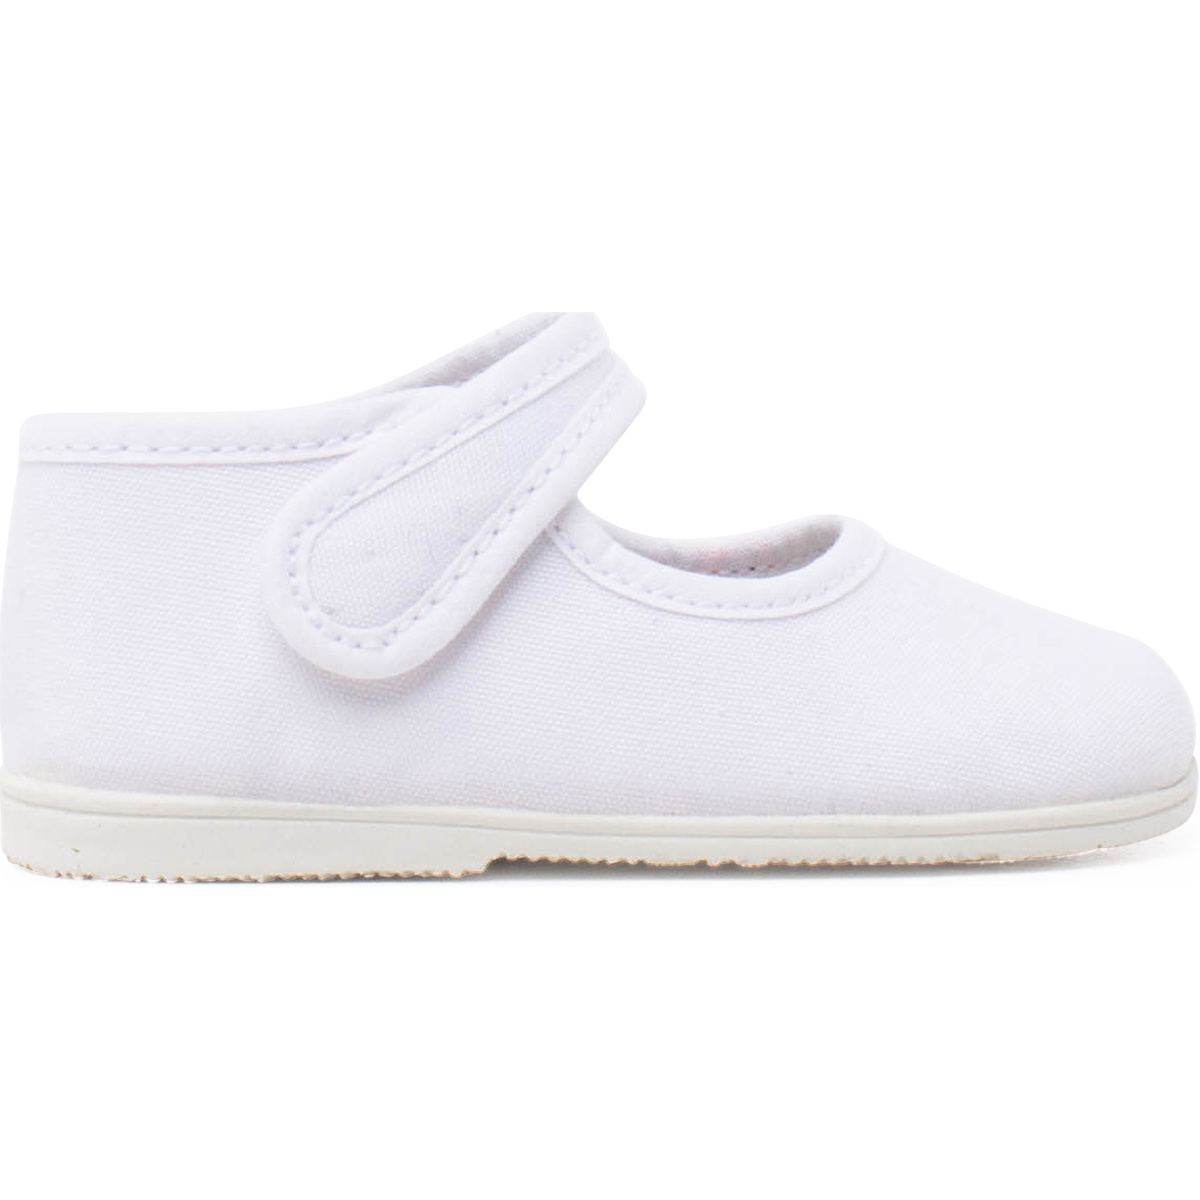 Pisamonas Blanc Chaussures babies en toile semelle fine